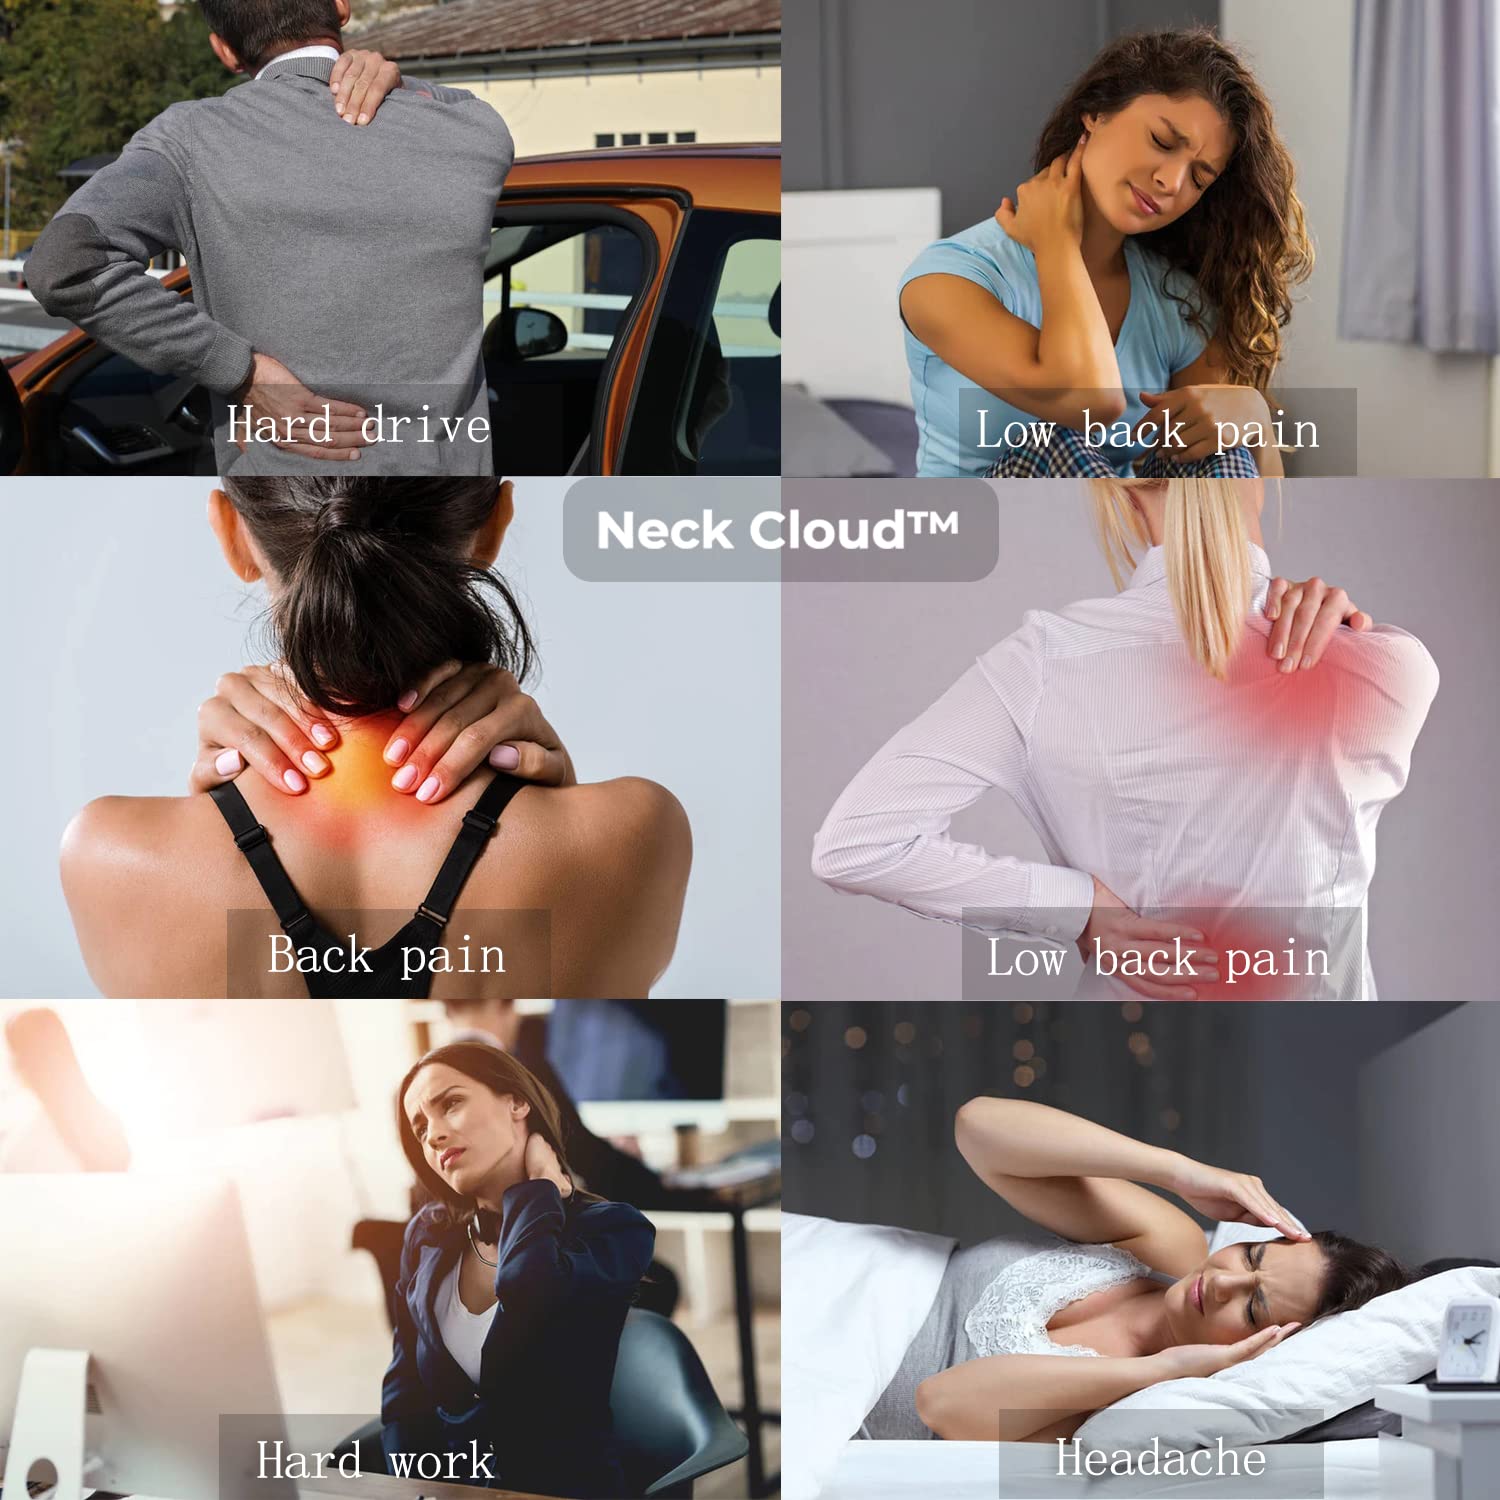 Neck Cloud™ - Cervical Traction Device, Trademark Certificate Designates Unique Authentic Product for Hump. Neck Stretcher Cervical Traction for Tmj Pain Relief (Blue)